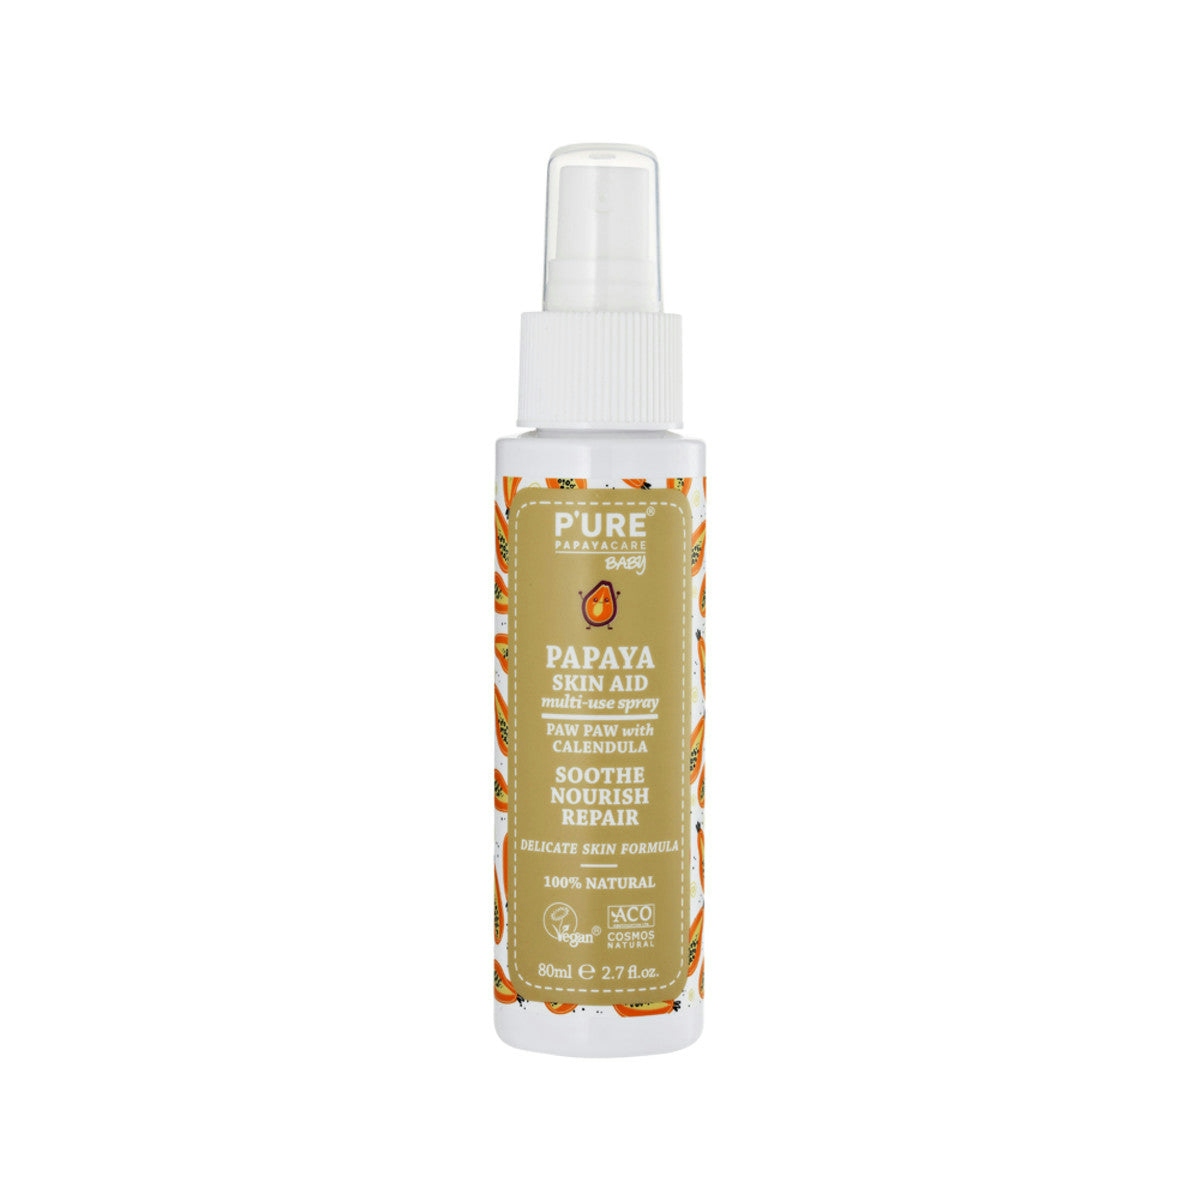 image of P'URE Papayacare Baby Papaya Skin Aid Multi-Use Spray (Paw Paw with Calendula) 80ml on white background